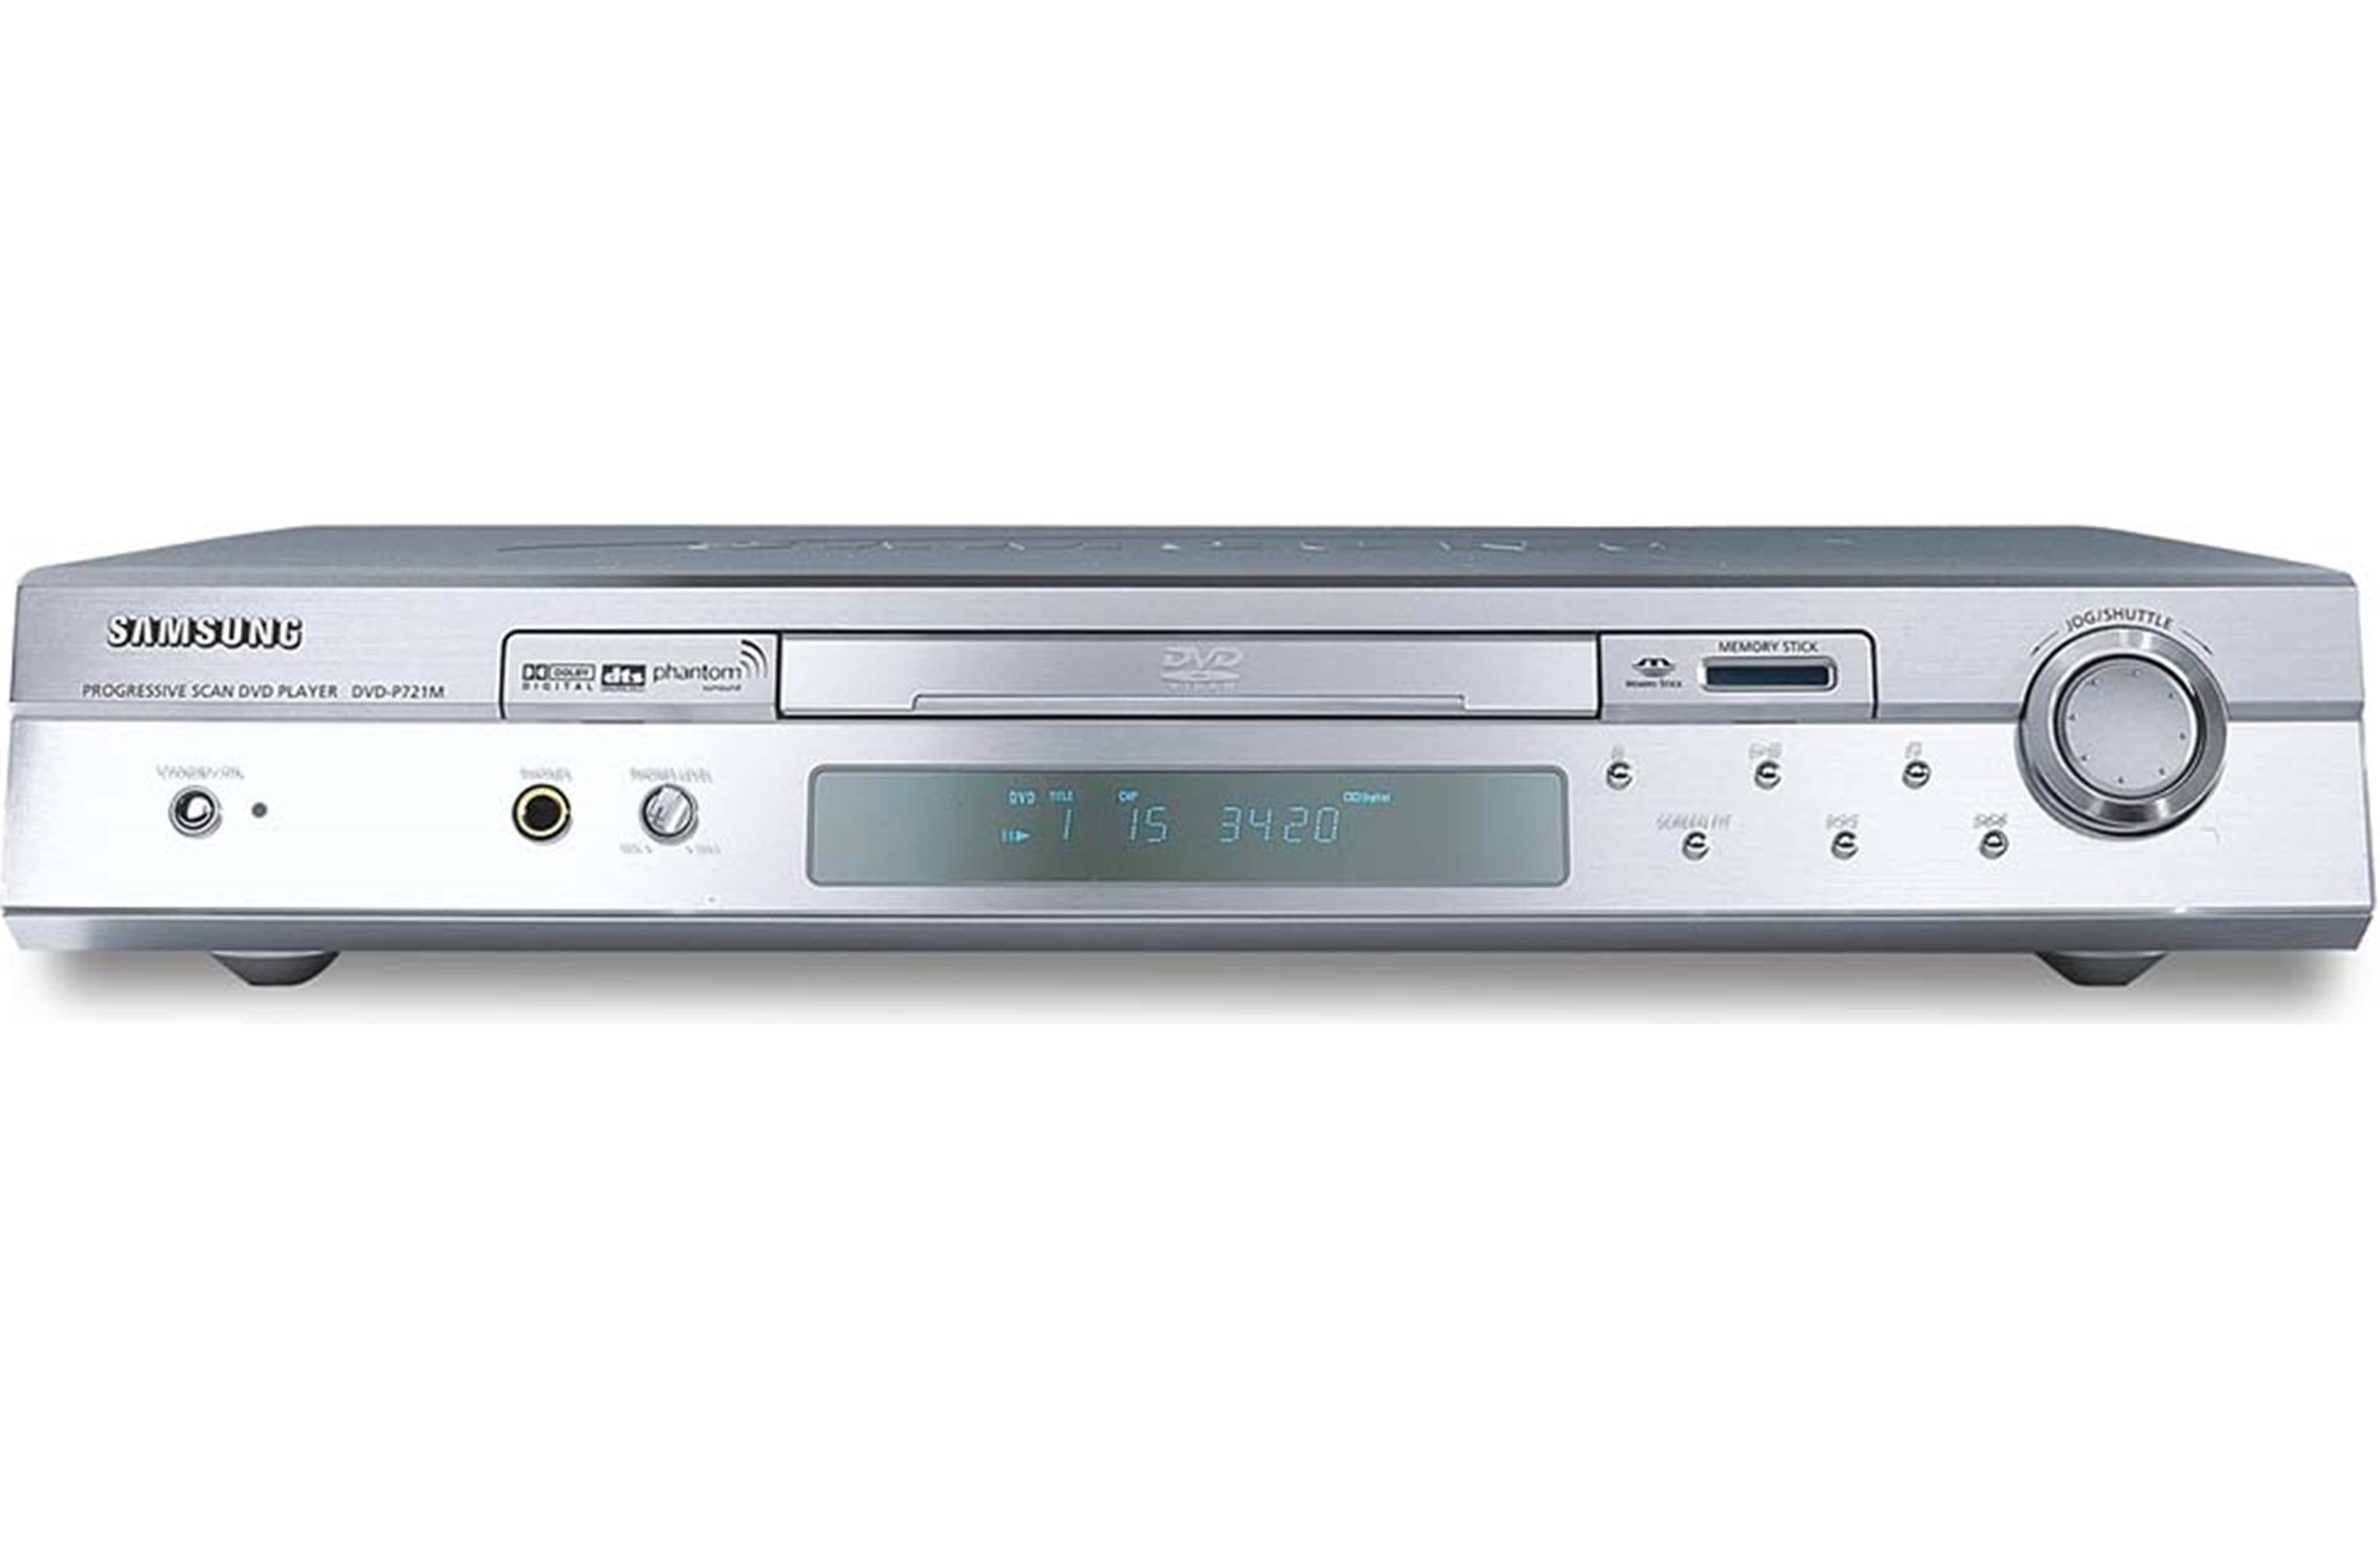 Samsung DVDP721M Dvd-p721m DVD/cd Player With Progressive Scan